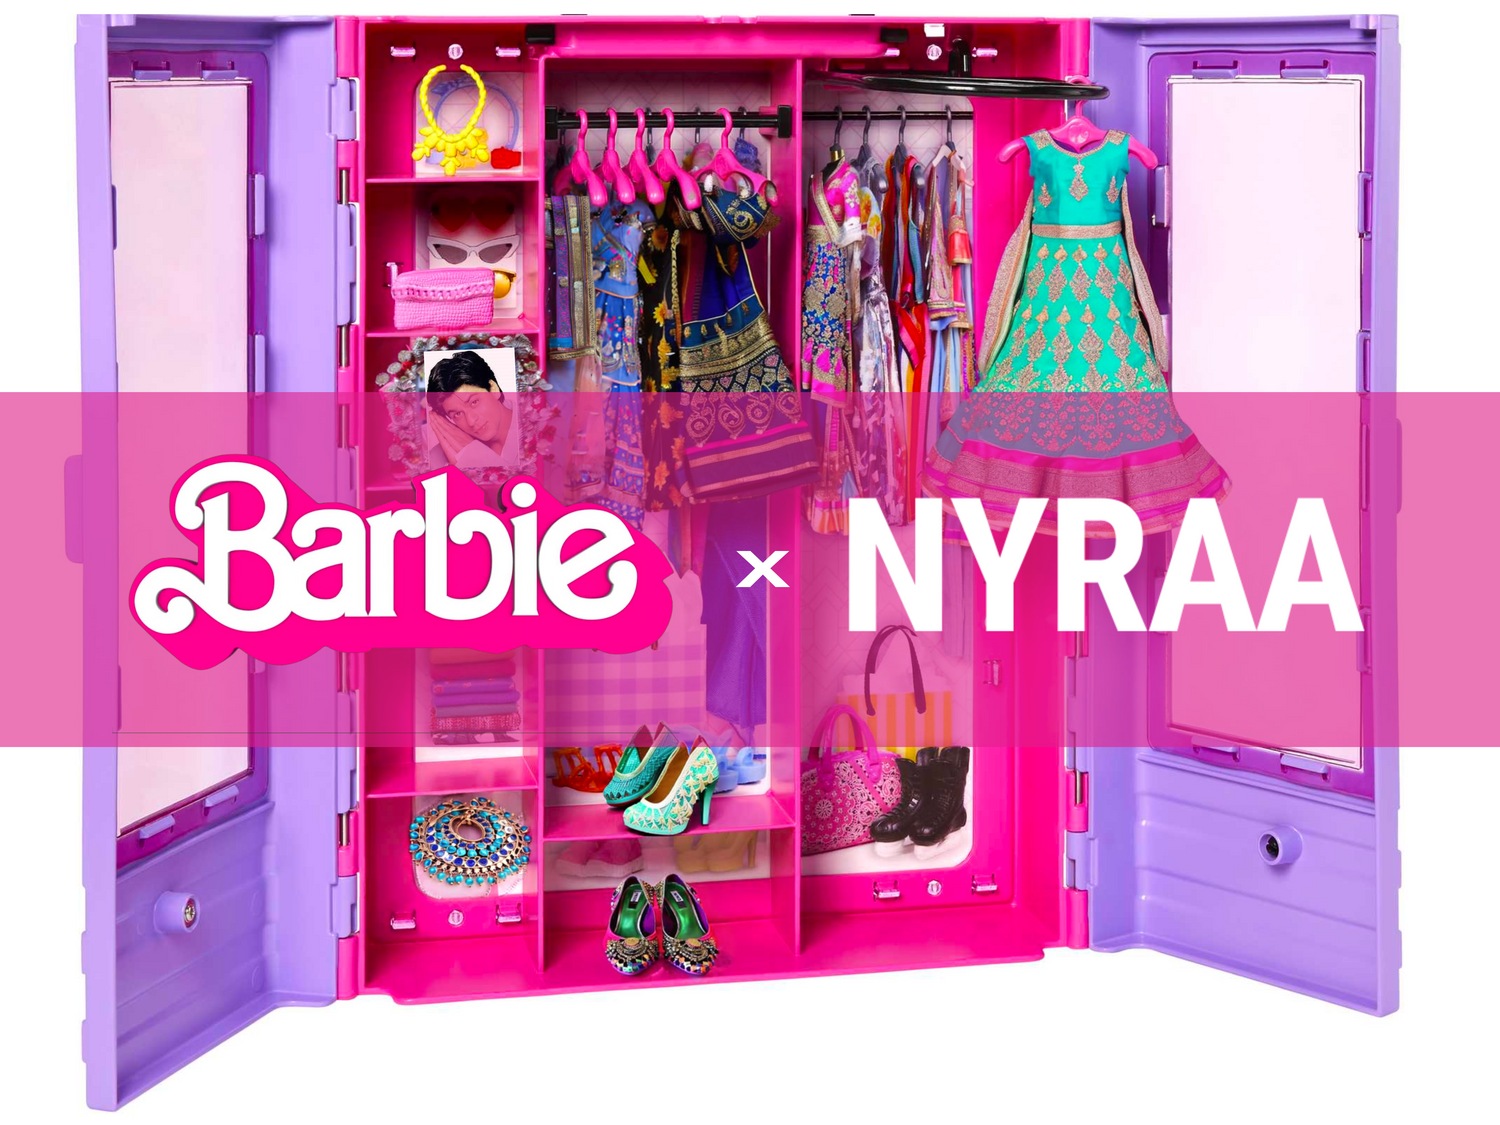 Top 7 Items in Barbie's Indian Closet